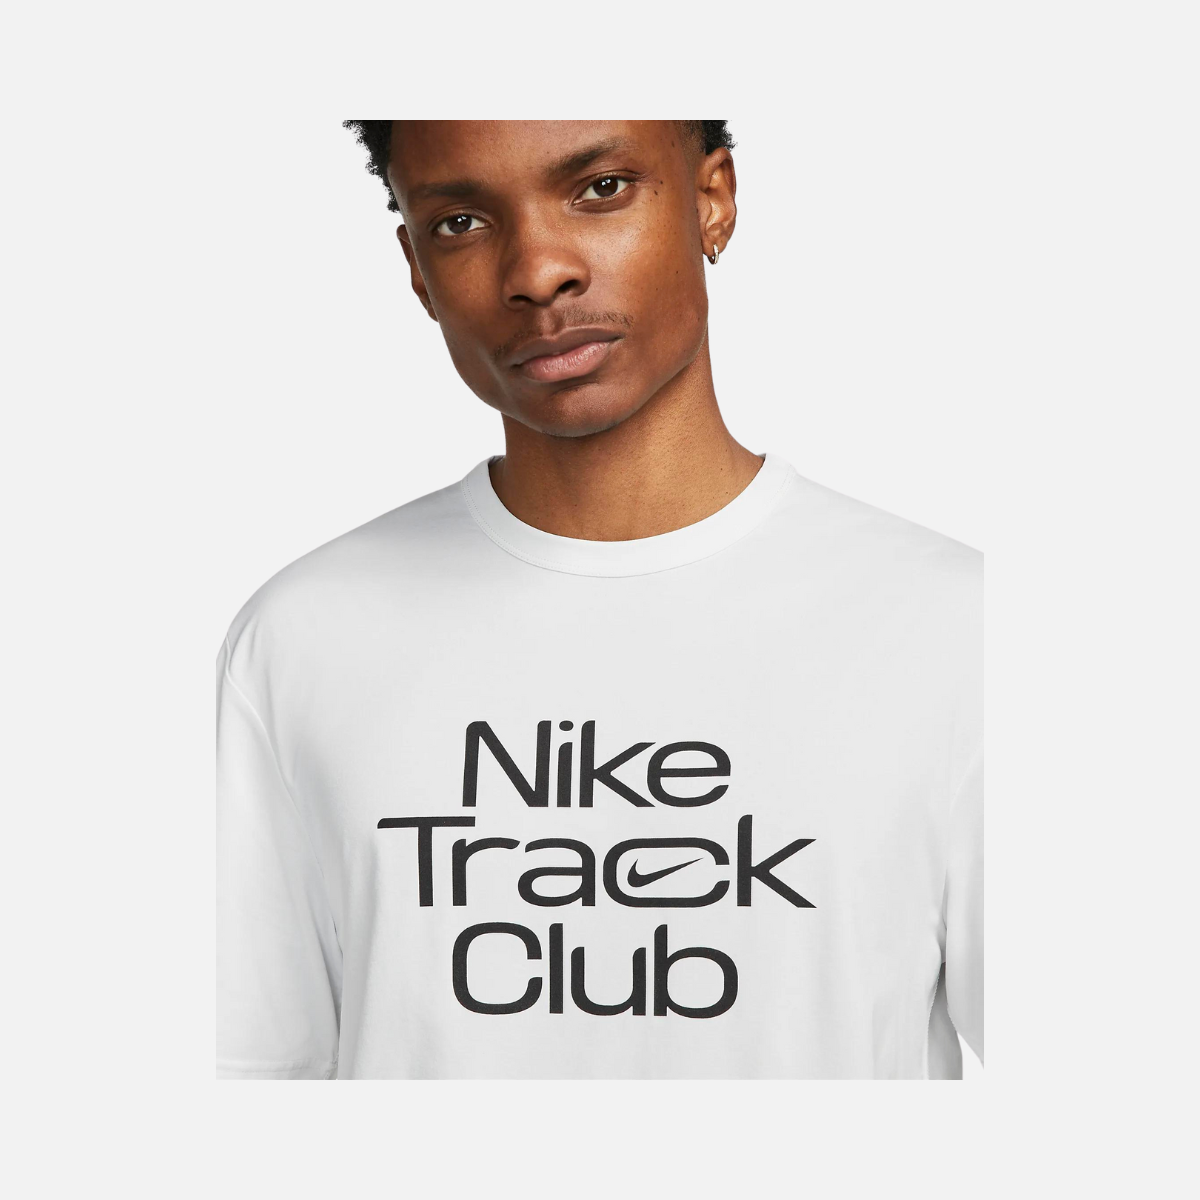 Nike Track Club Men's Dri-FIT Short-Sleeve Running Top -White/Black